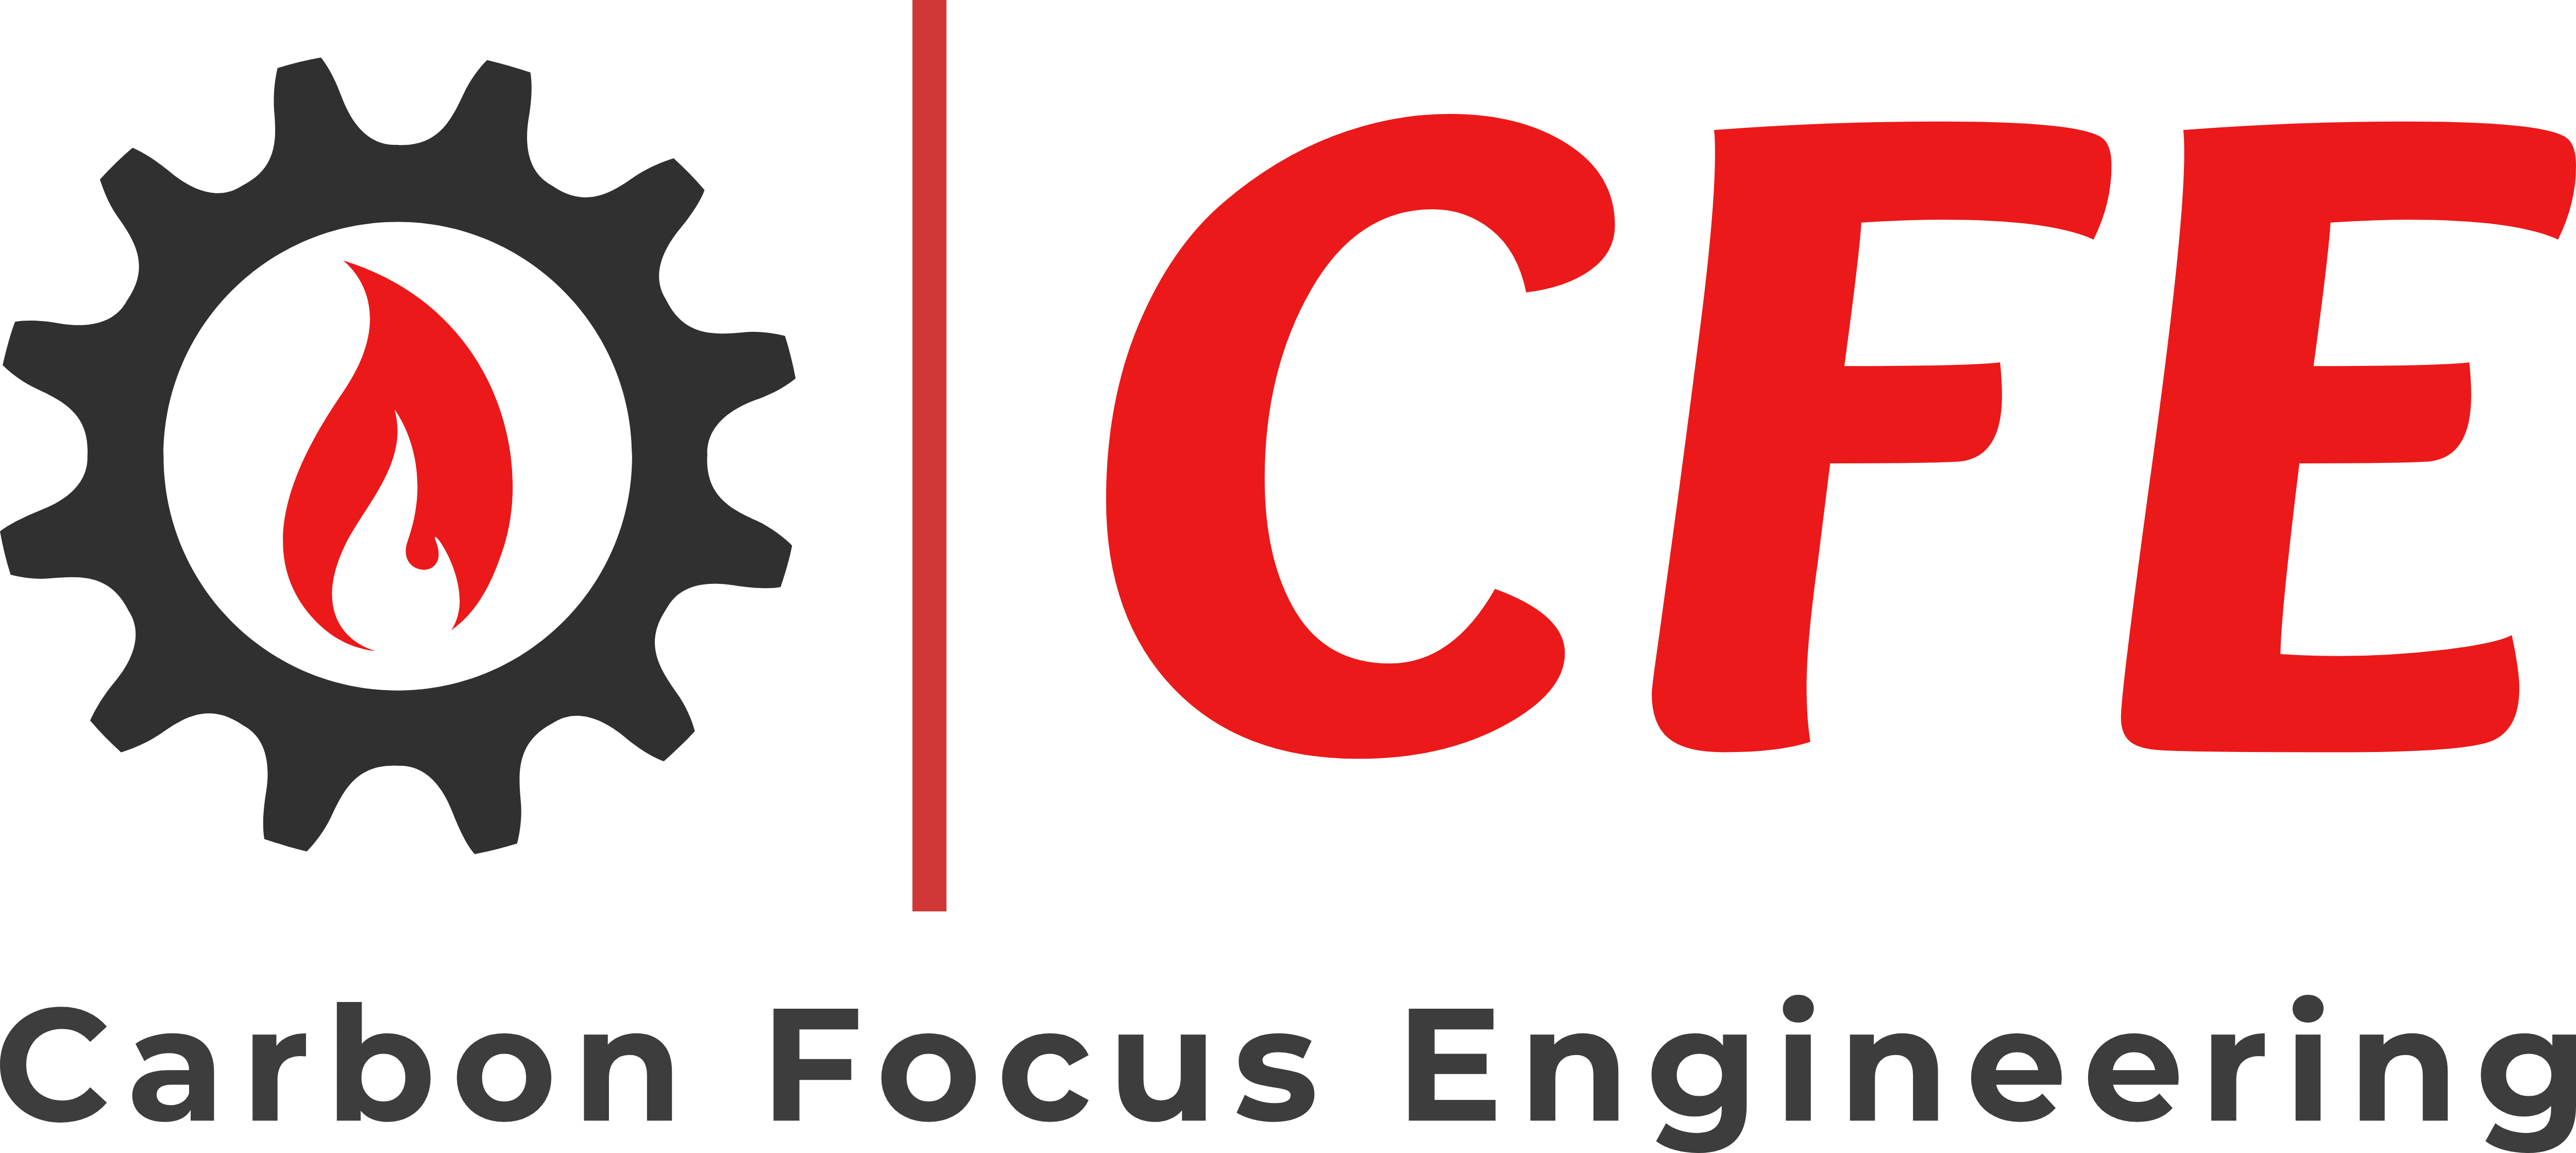 Carbon Focus Engineering (CFE)